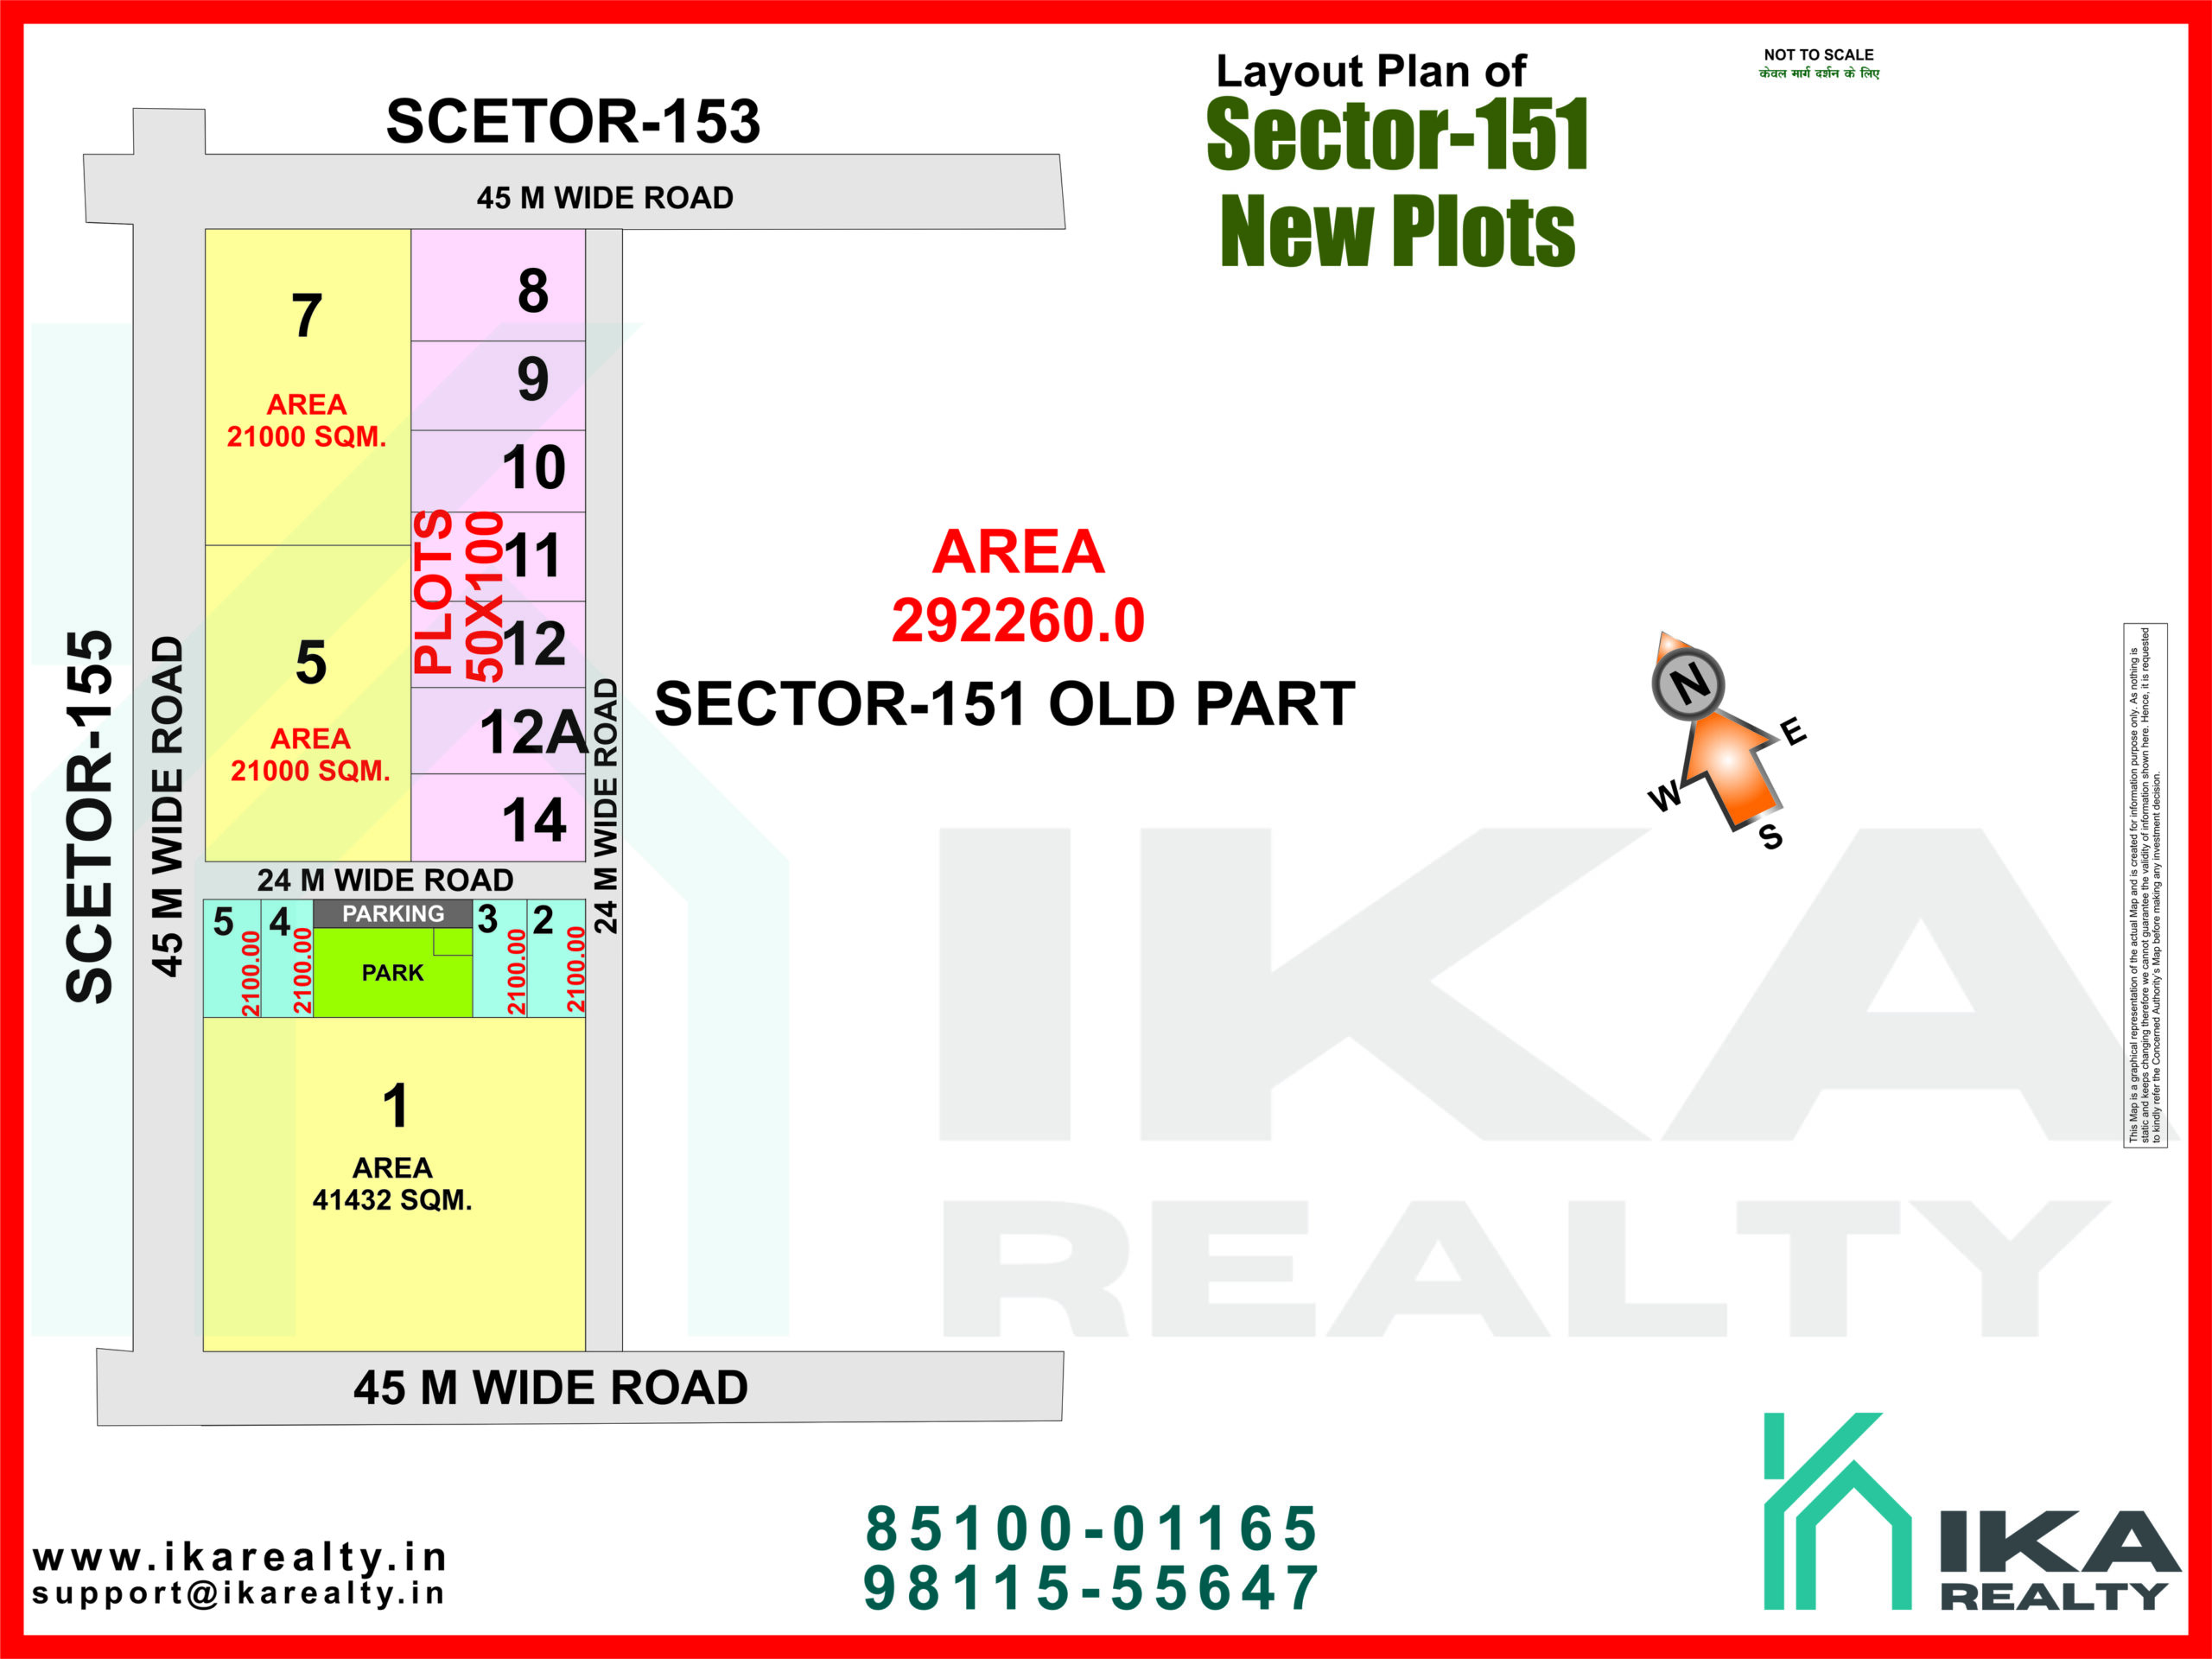 Sector-151 new plots